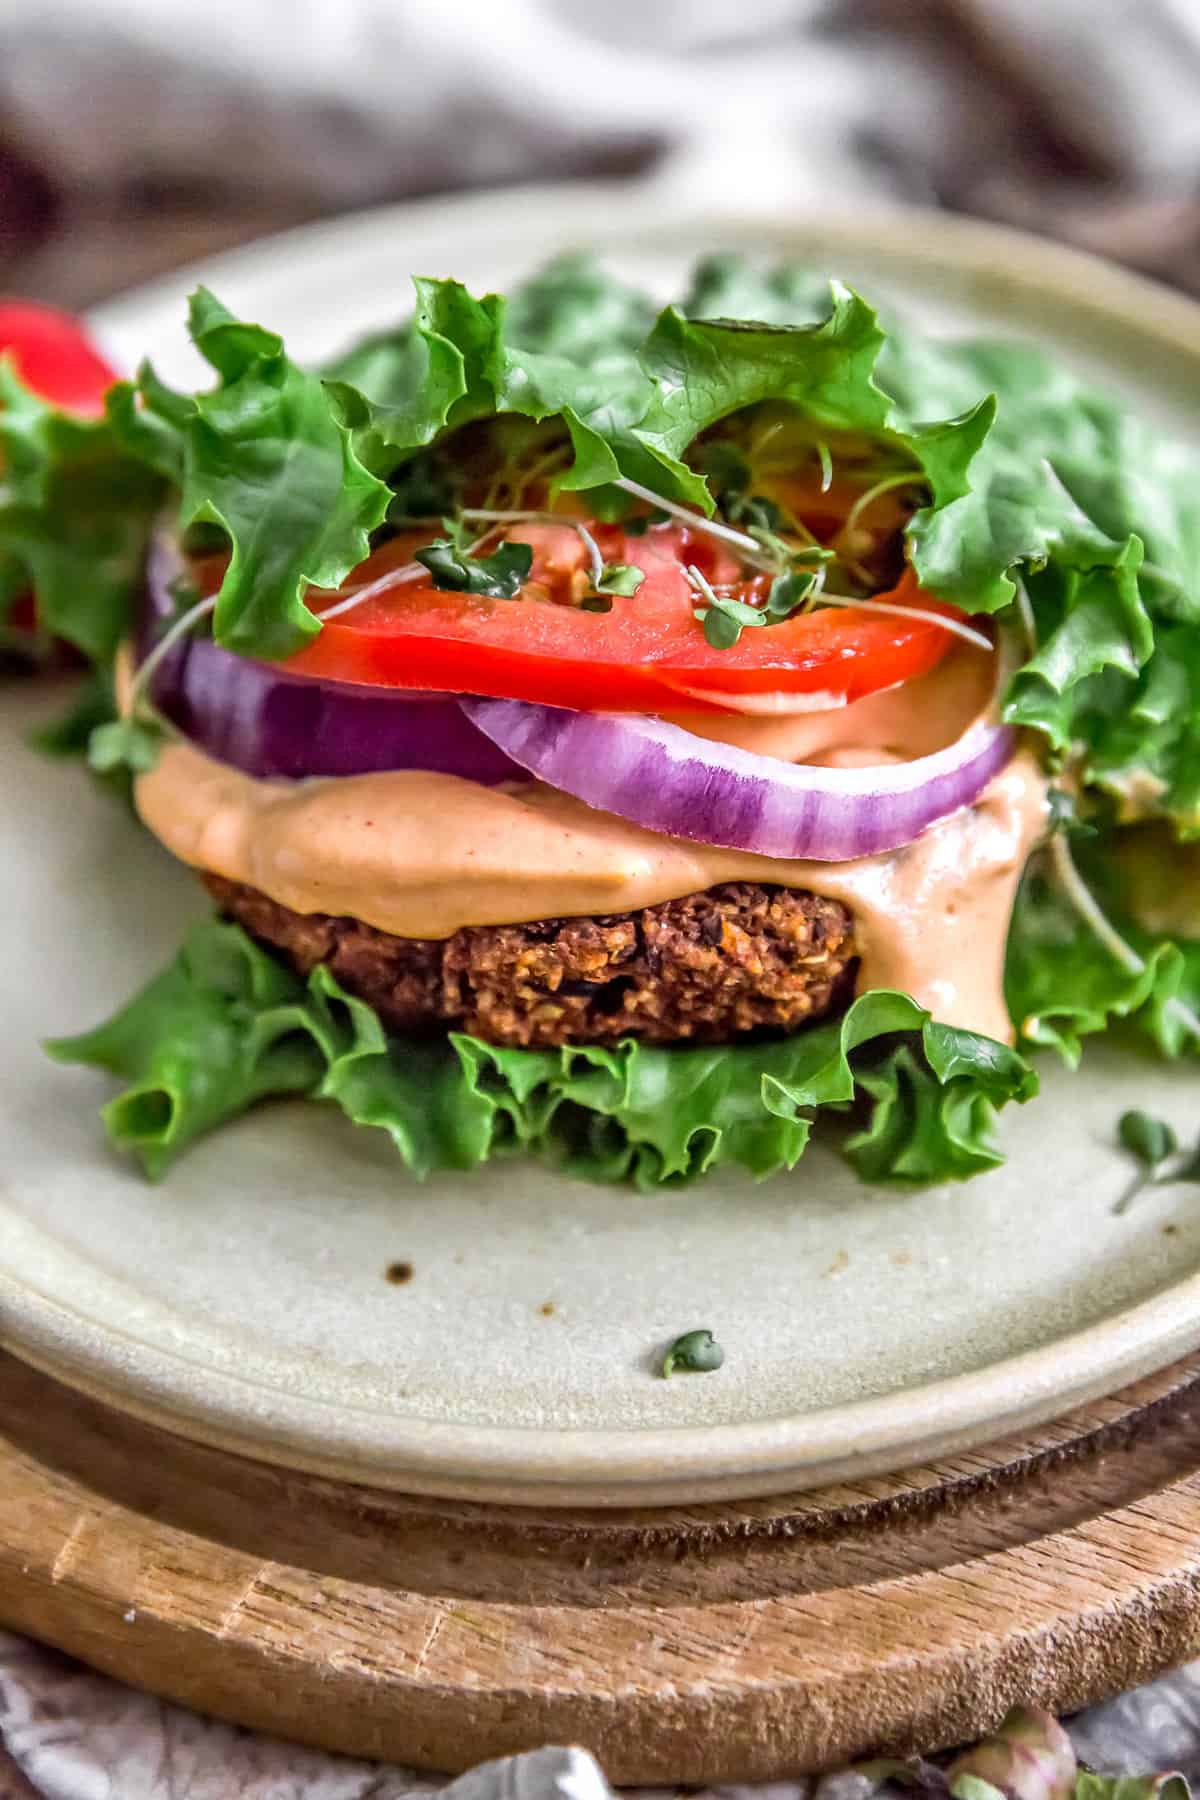 Lettuce wrap of Ultimate Healthy Vegan Black Bean Burger with Special Burger Sauce